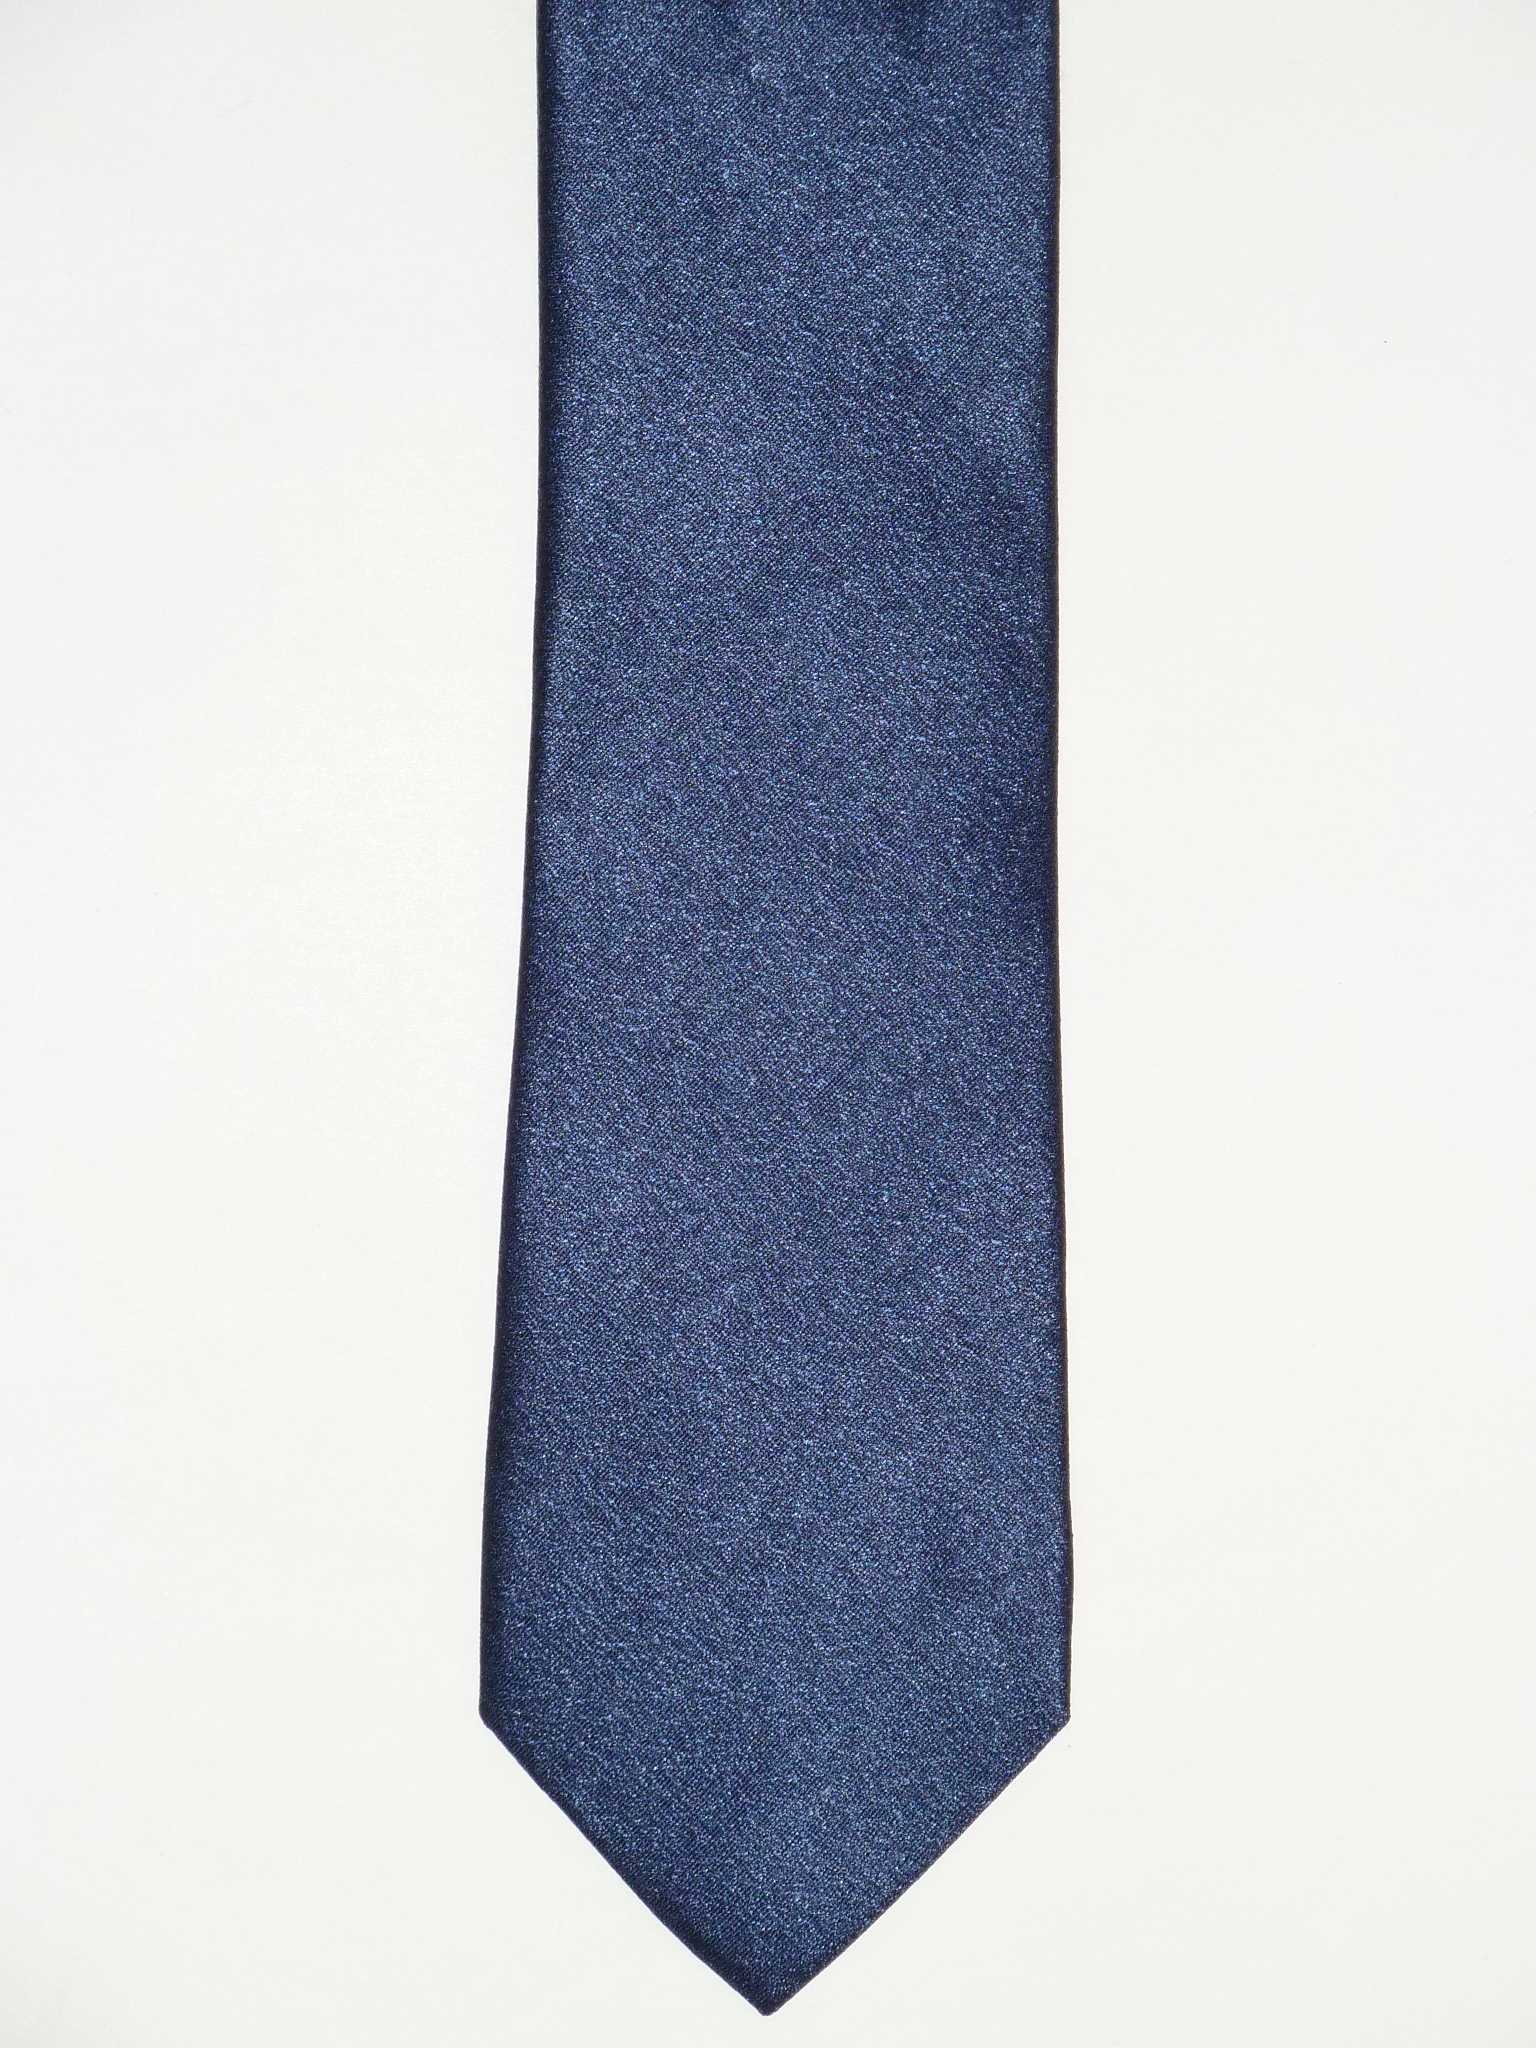 Krawatte, 100% Seide, 7,5cm, offene Struktur, Royalblau – MAICA  Krawattenfabrik